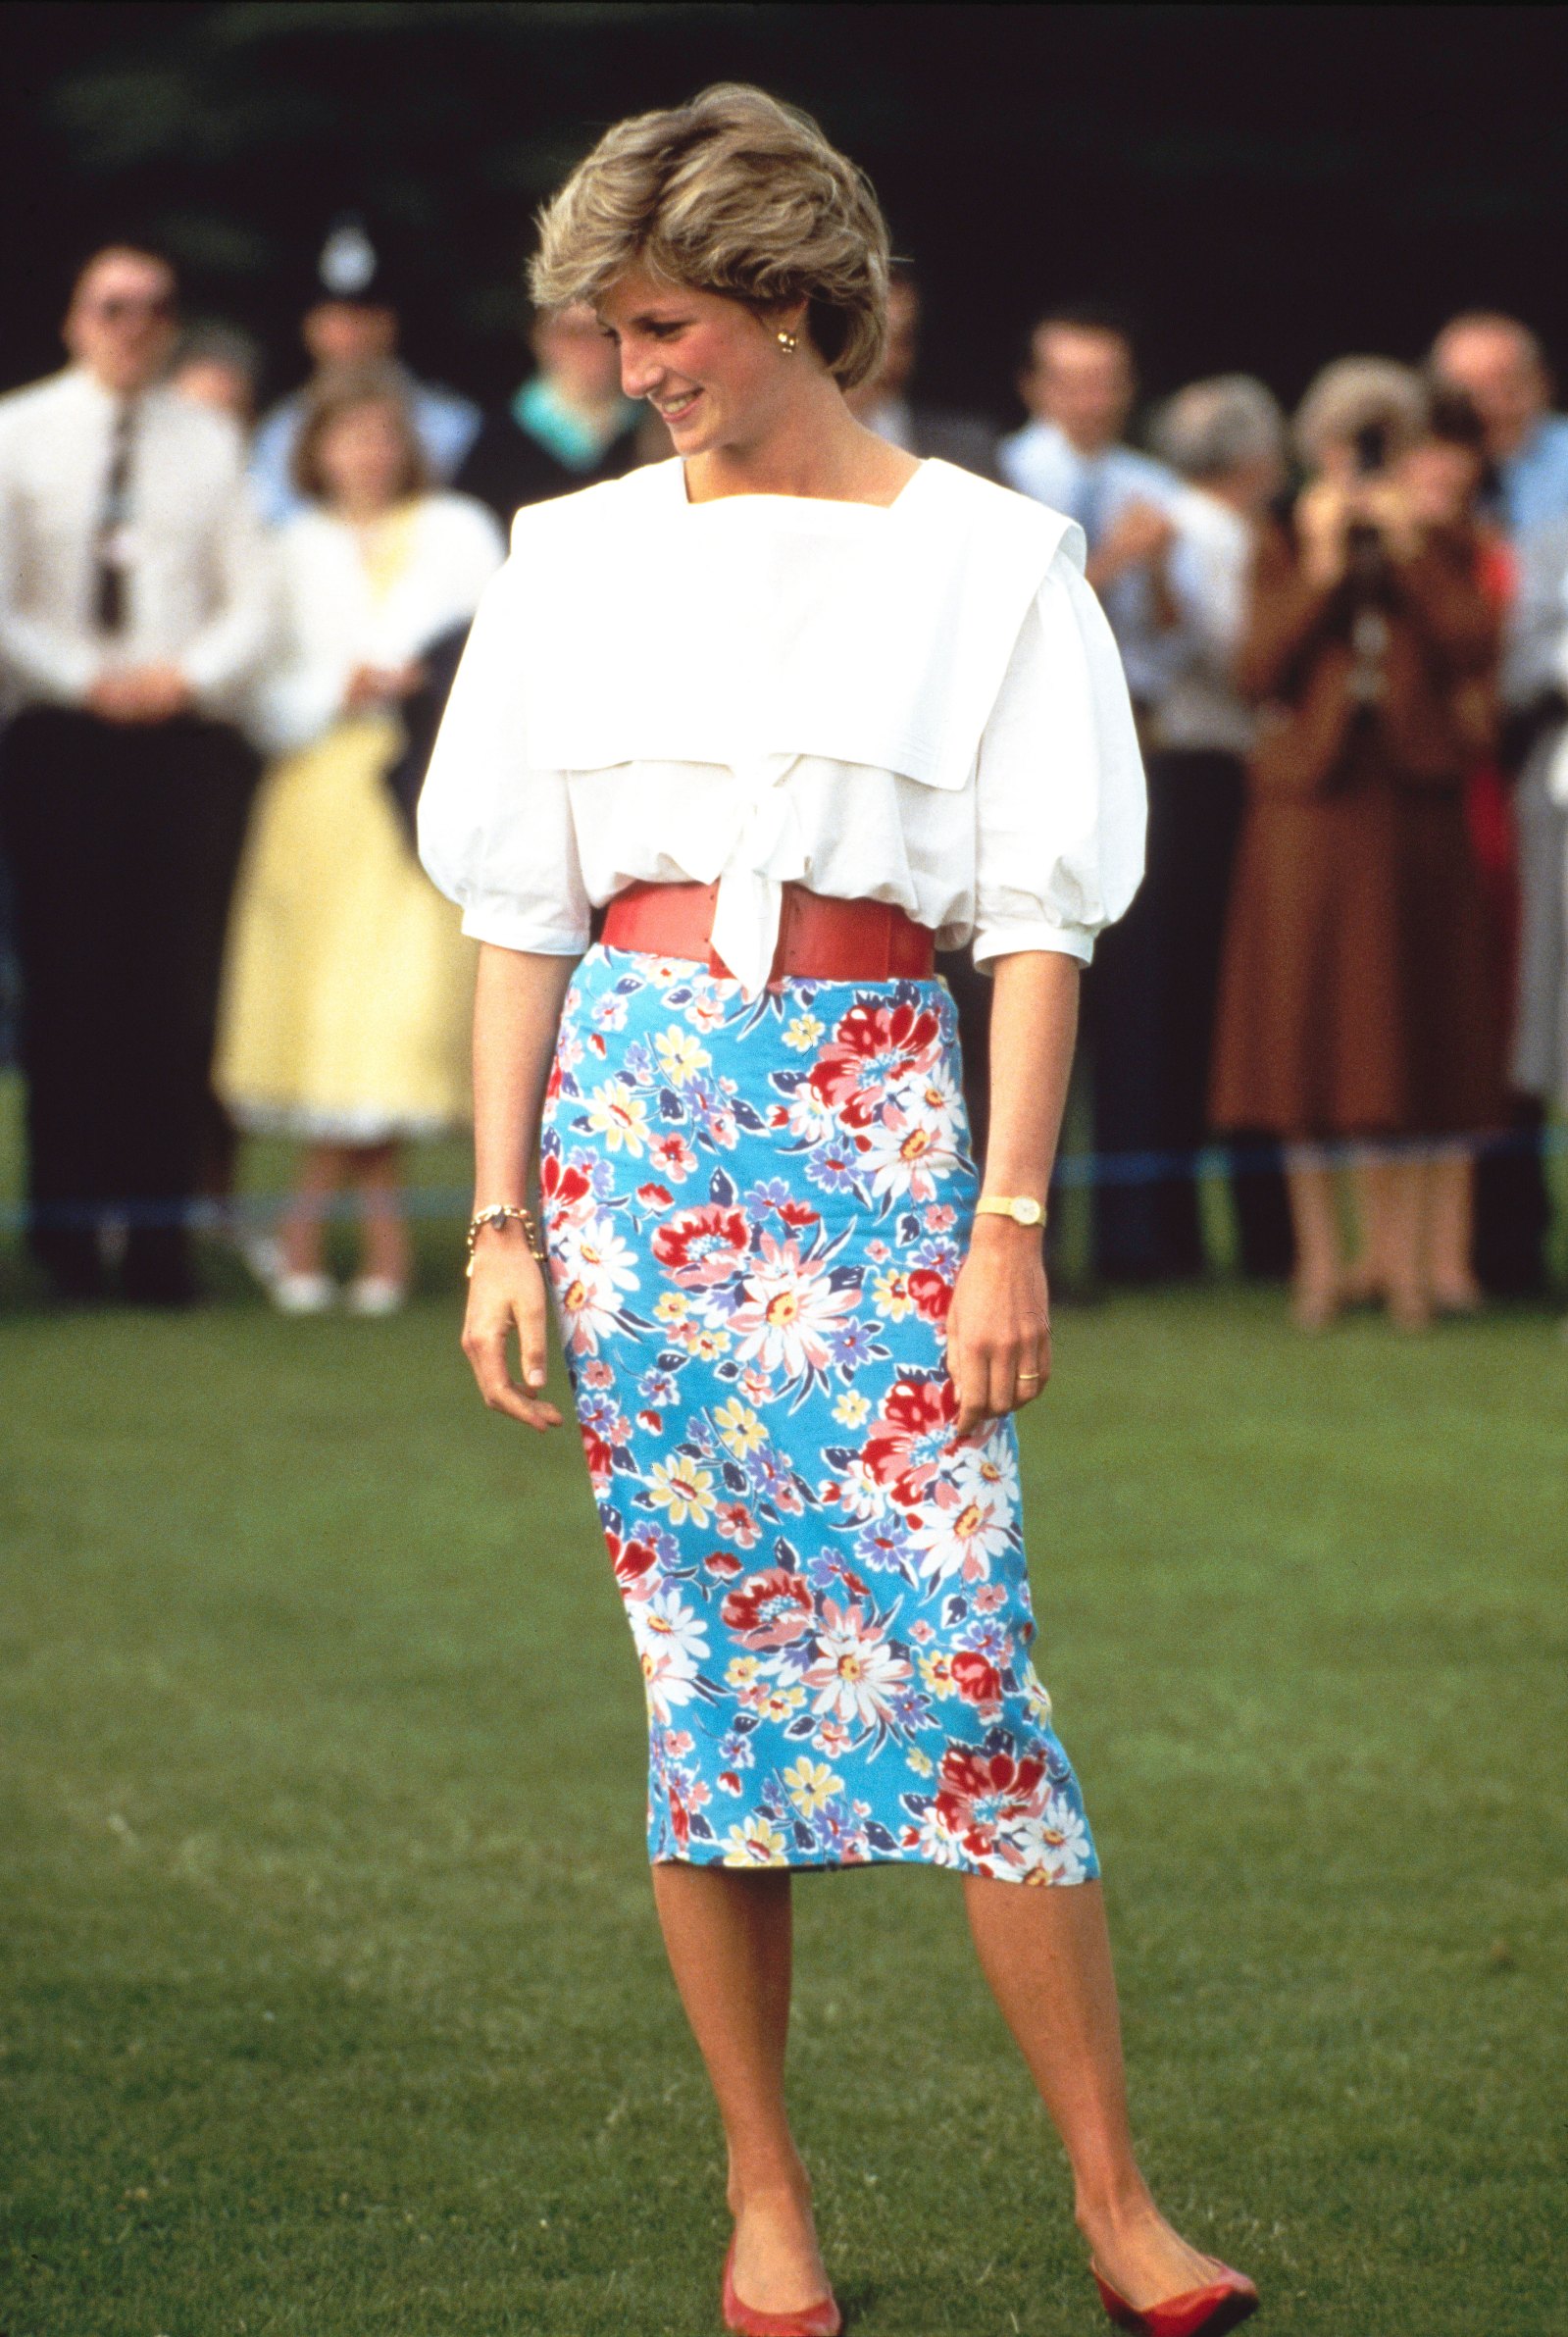 Princess Dianas Most Iconic Looks